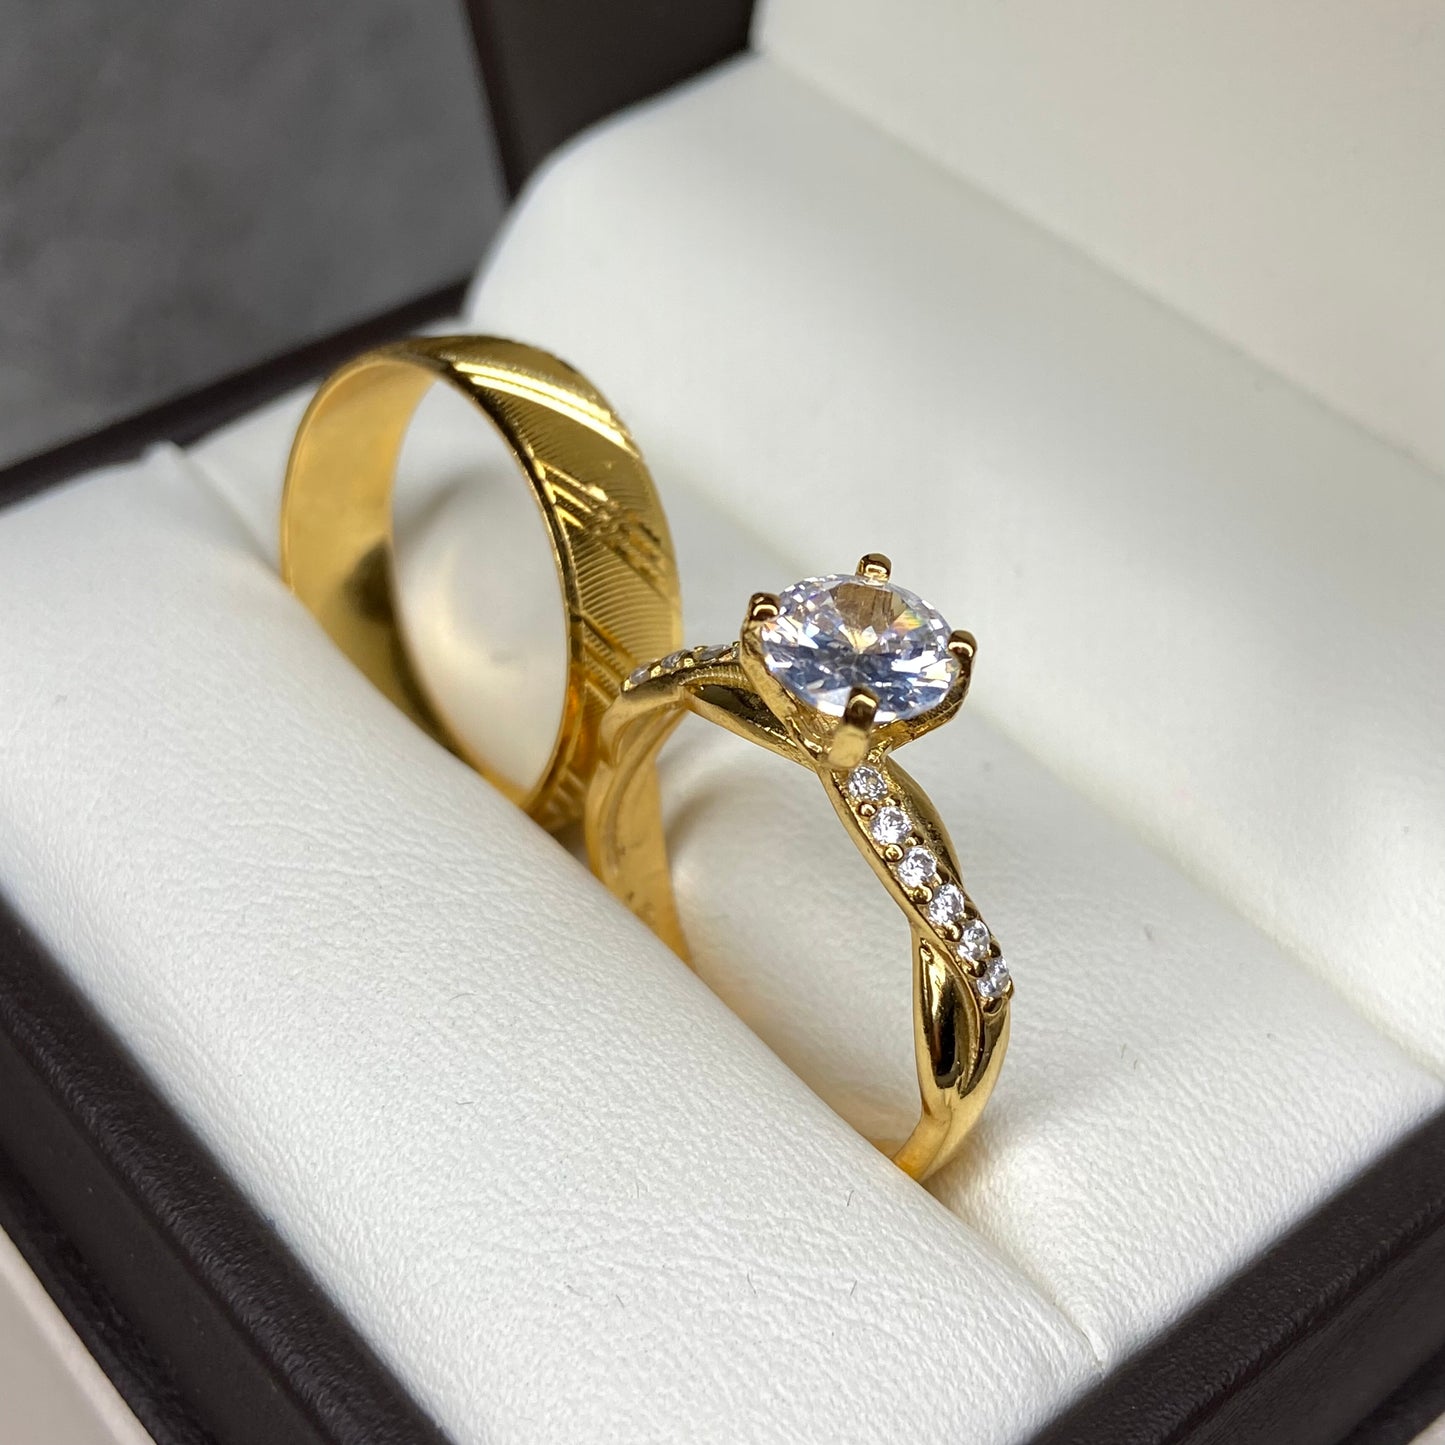 Dúo de anillos Milán-Charlize en plata con baño de oro amarillo